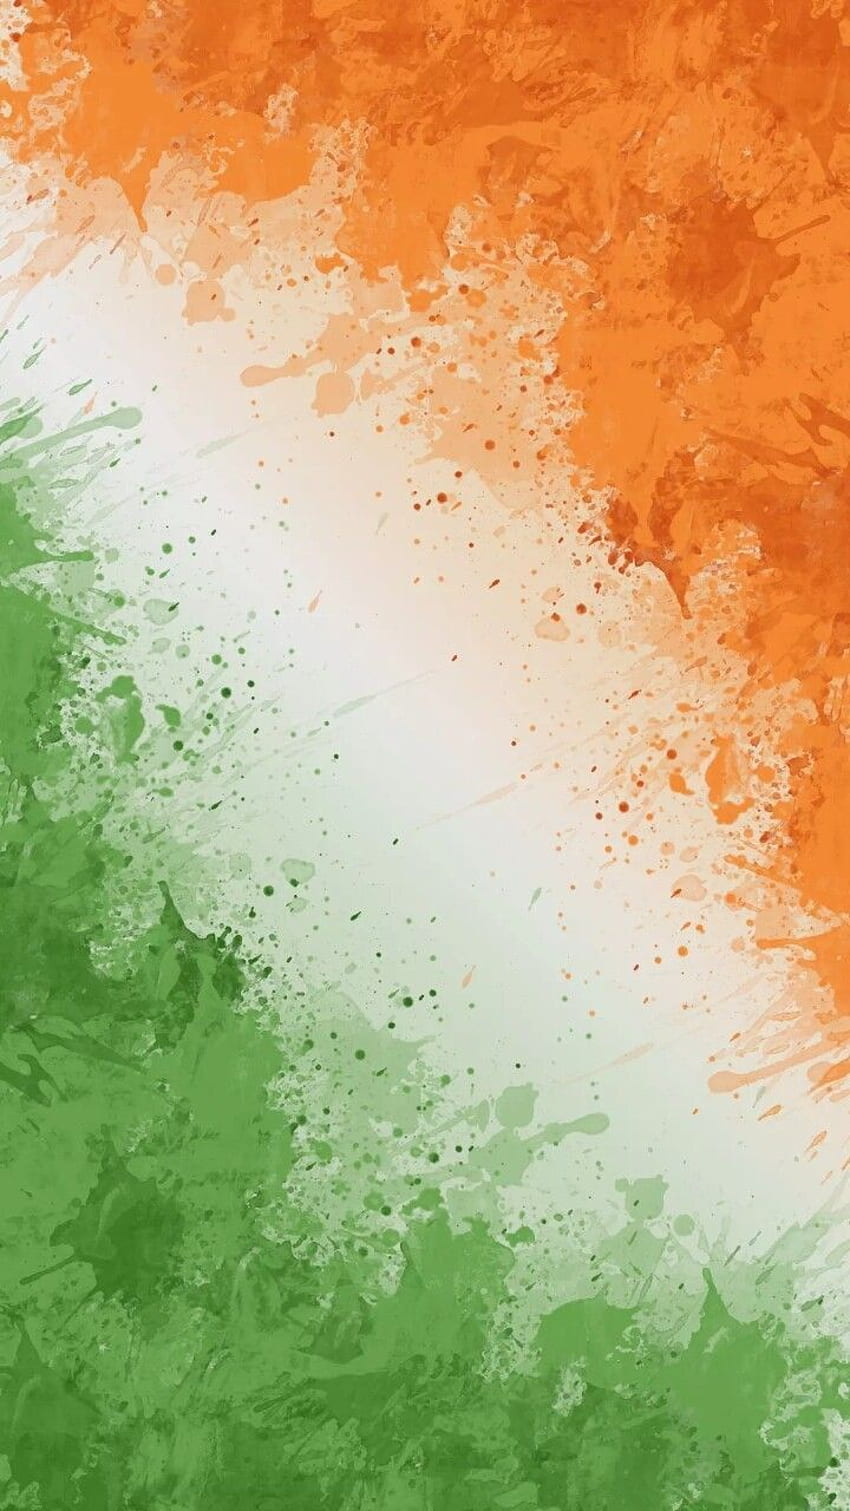 Símbolo da bandeira tricolor indiana de força, paz e prosperidade. Bandeira indiana, Cores da bandeira indiana, Bandeira indiana, Bandeira colorida Papel de parede de celular HD